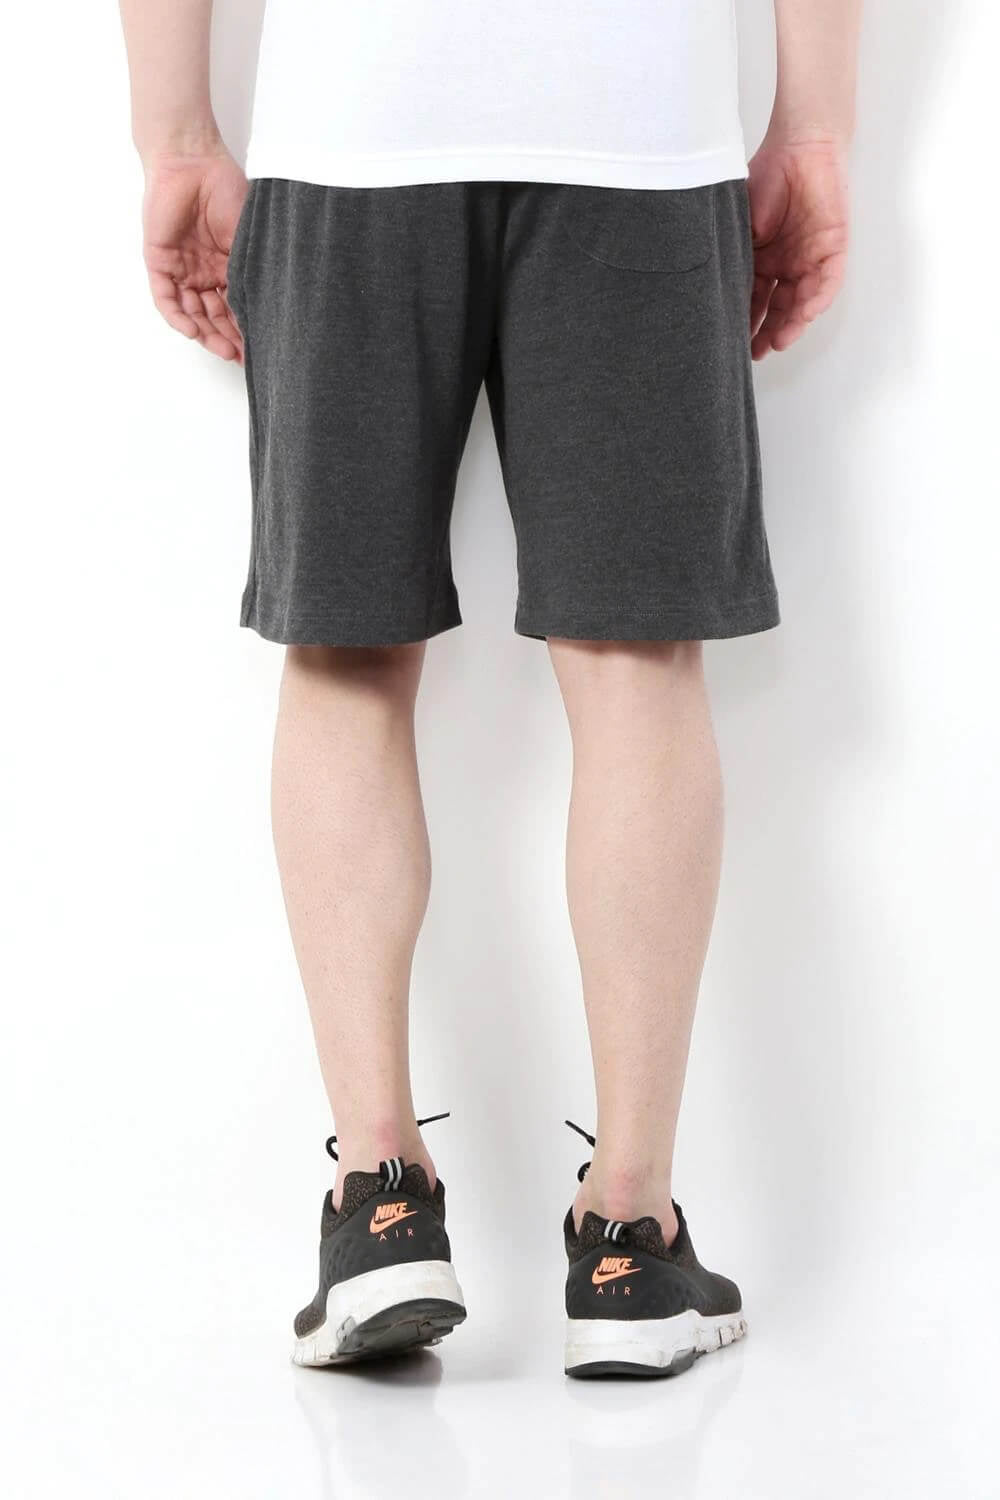 Van Heusen Charcoal Knit Shorts for Men #50002